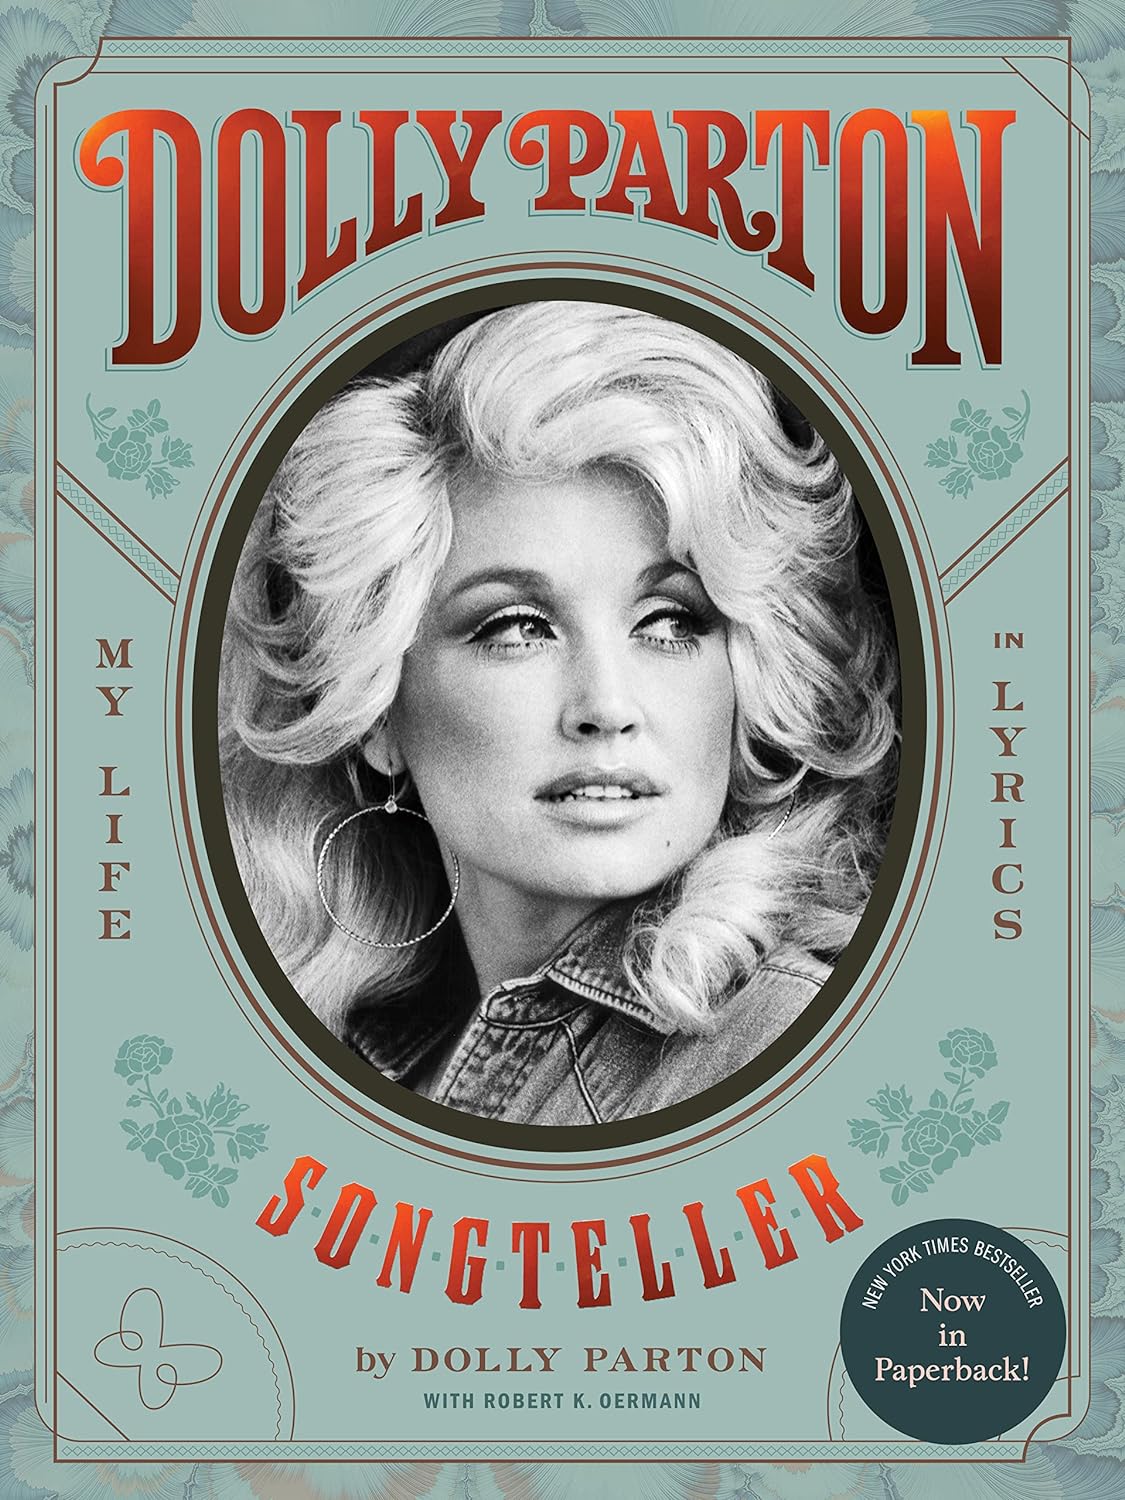 Dolly Parton, Songteller: My Life in Lyrics, by Dolly Parton